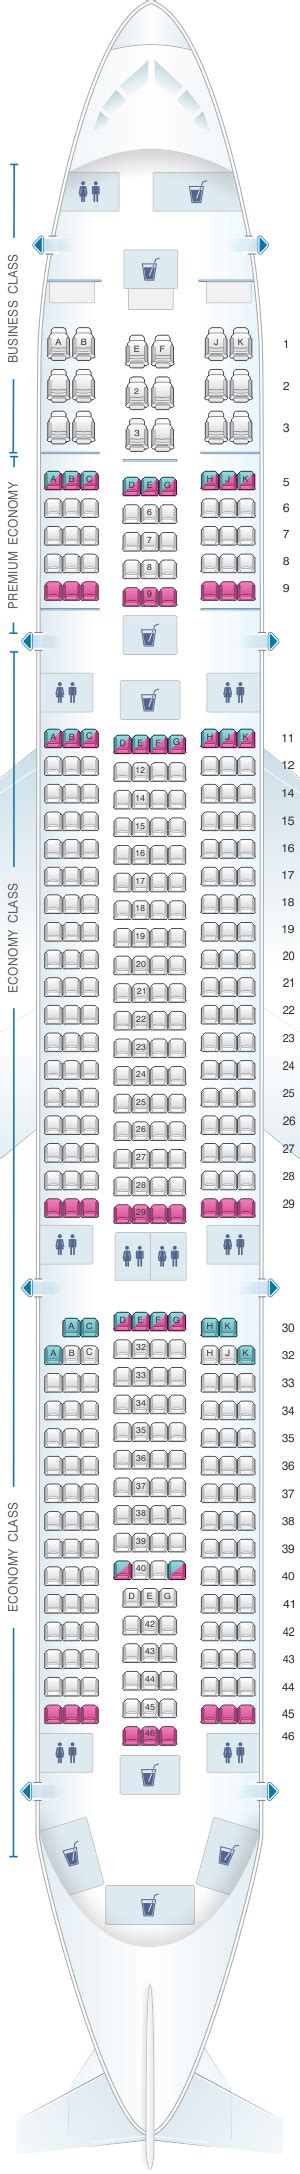 Air Mauritius A350 Seat Map Image To U